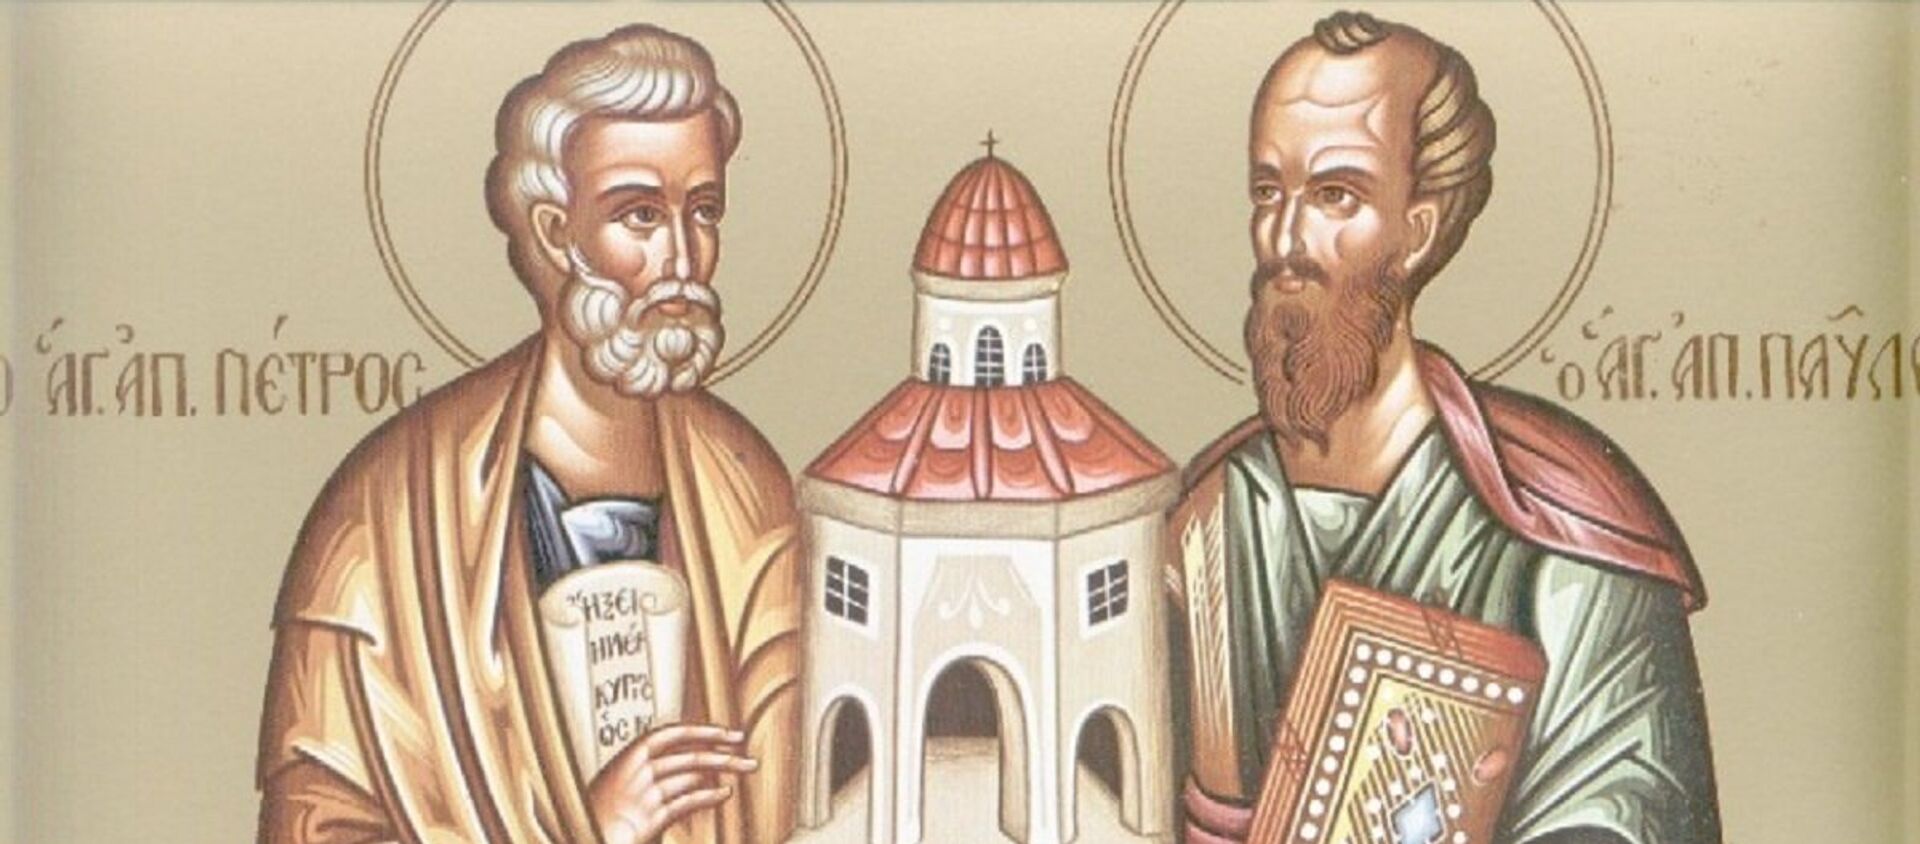 Icoana Sfinților Petru și Pavel - Sputnik Moldova, 1920, 01.07.2020